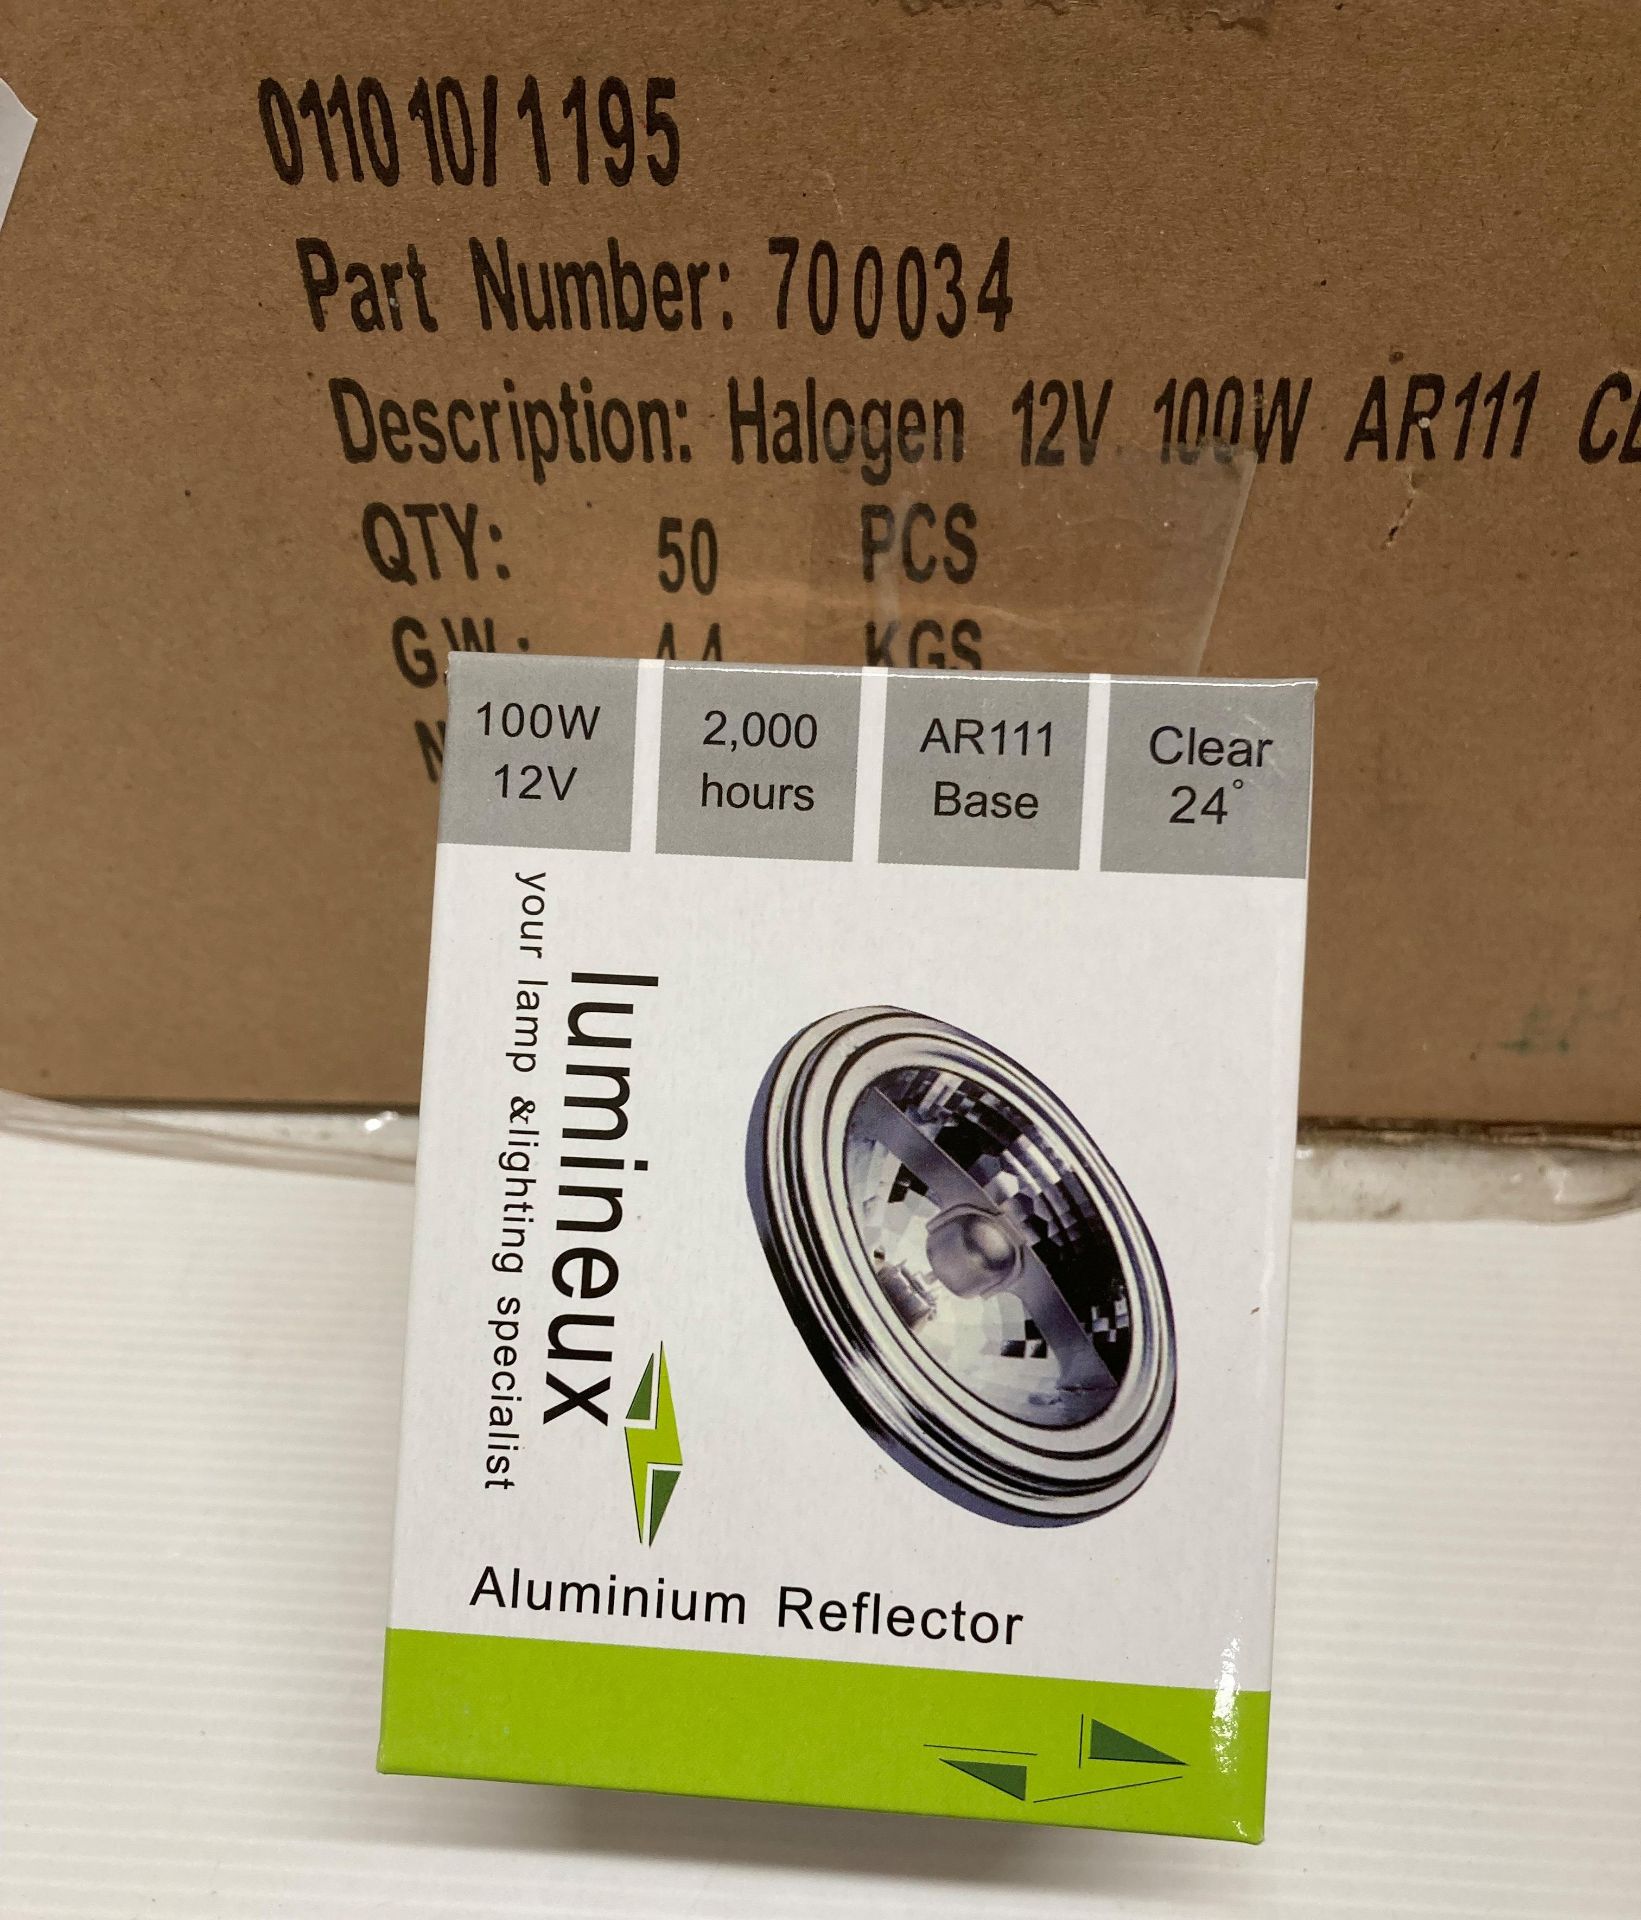 100 x Lumineux aluminium reflector ARIII halogen 12v 100w clear (2 x outer boxes) (saleroom - Image 2 of 2